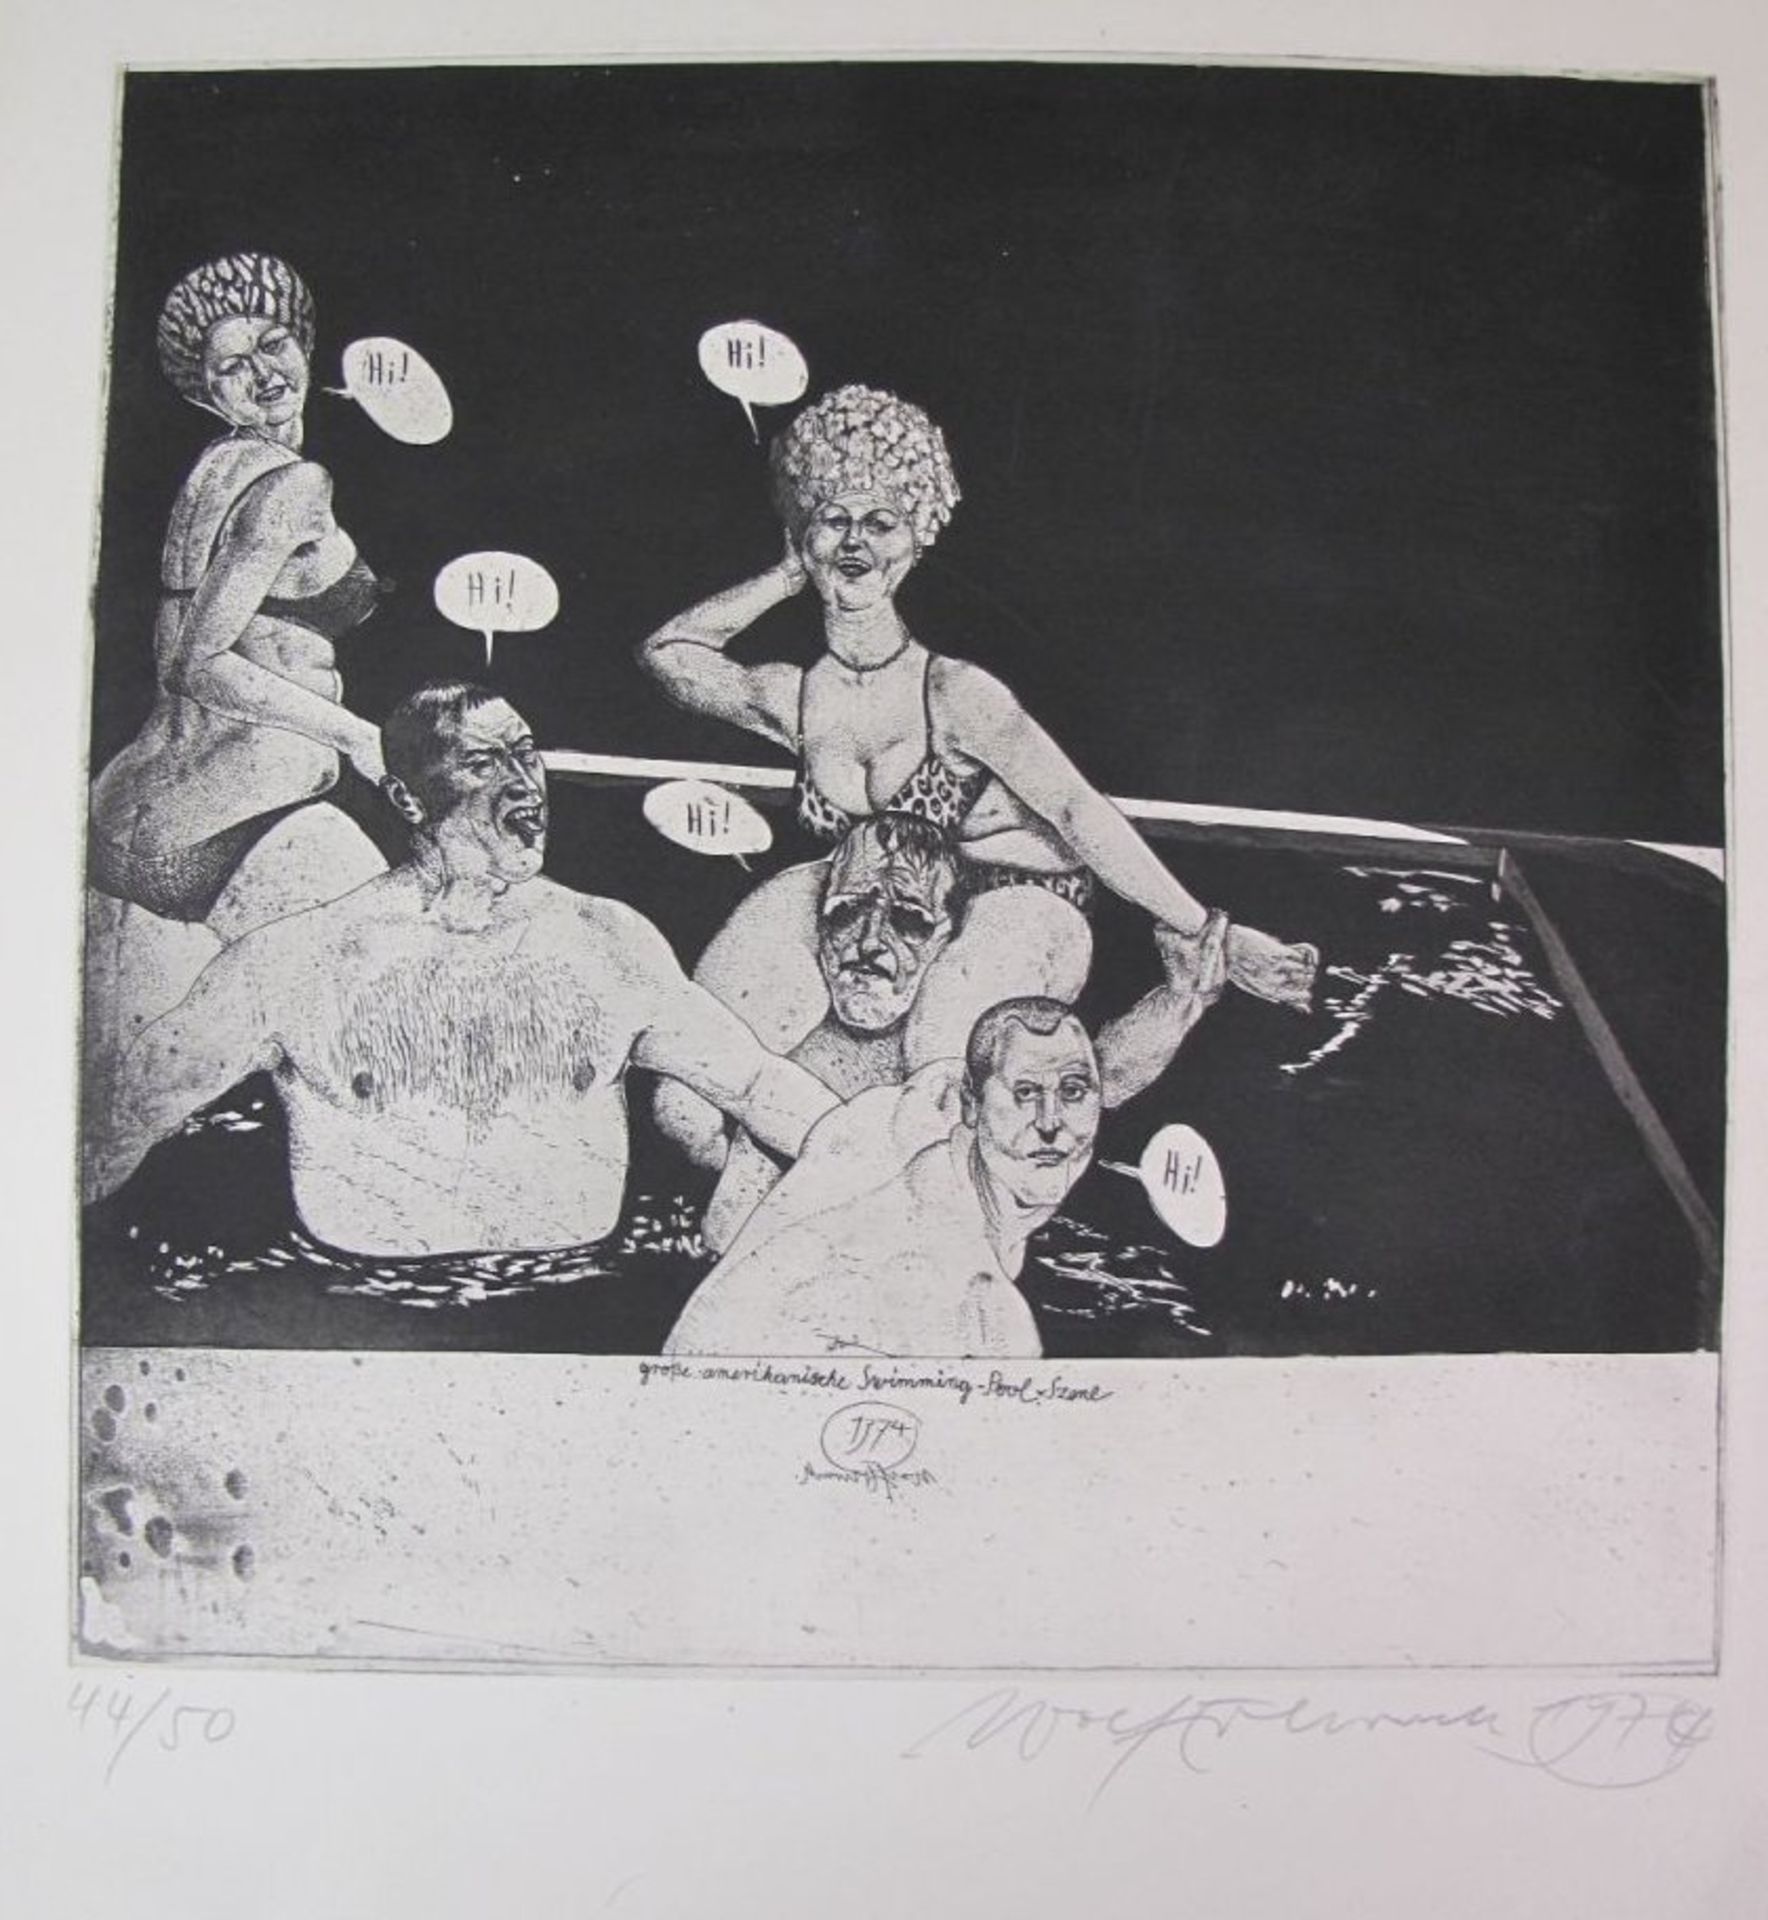 Wolf Erlbruch o.ä. "gr. amerikanische Swimming-Pool Szene", datiert und betitelt, 1974, Nr. 44/50,